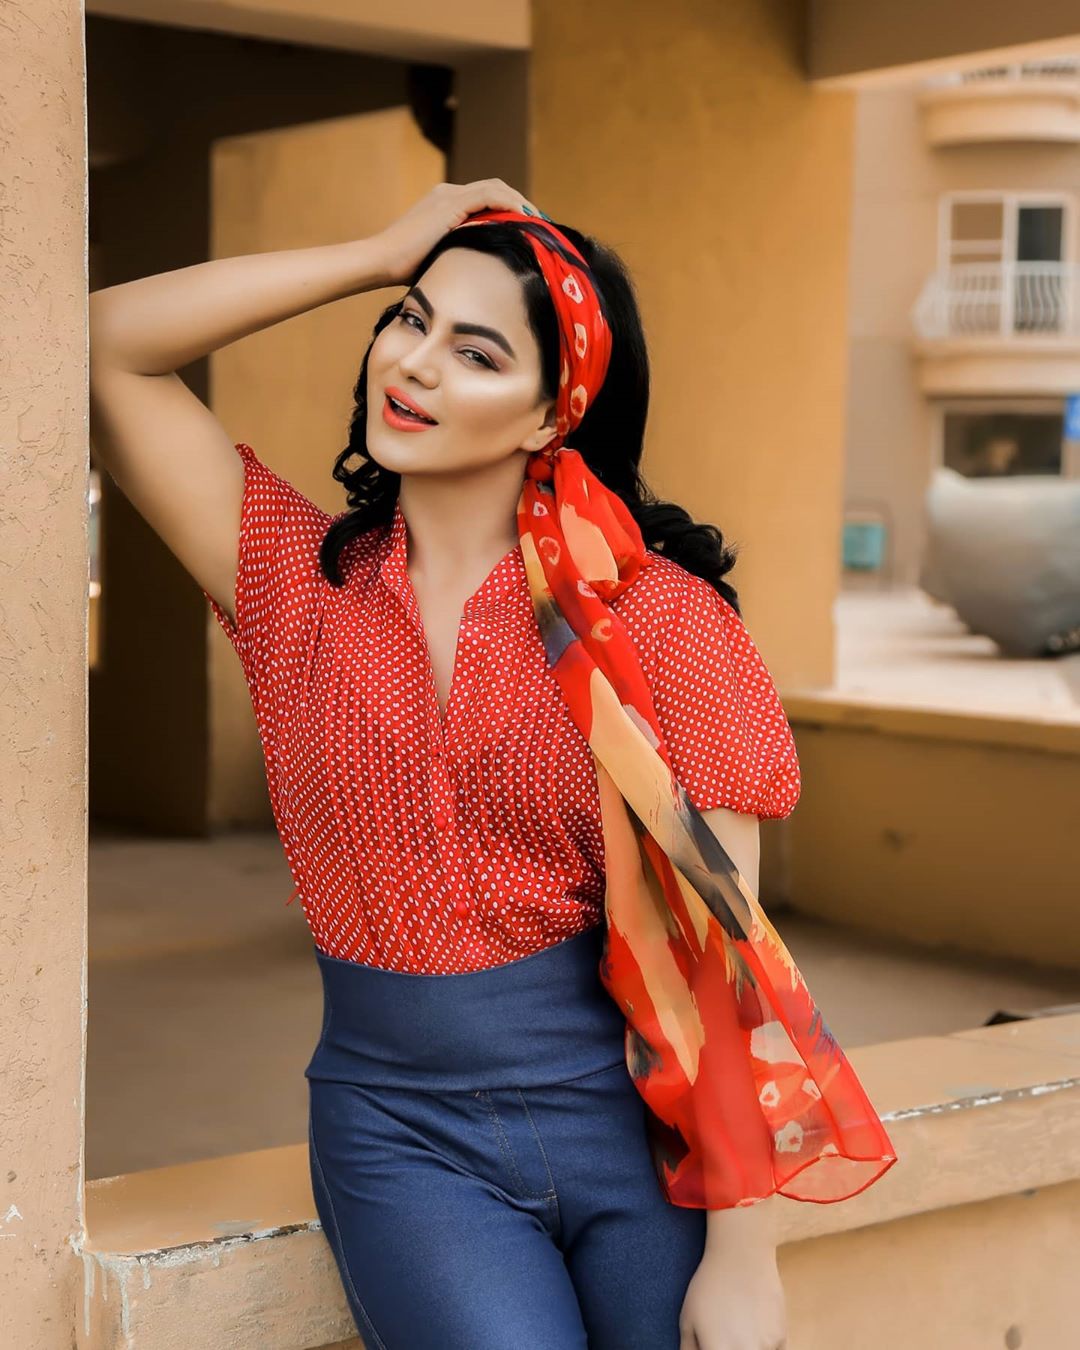 Actress Veena Malik Latest Pictures from Instagram